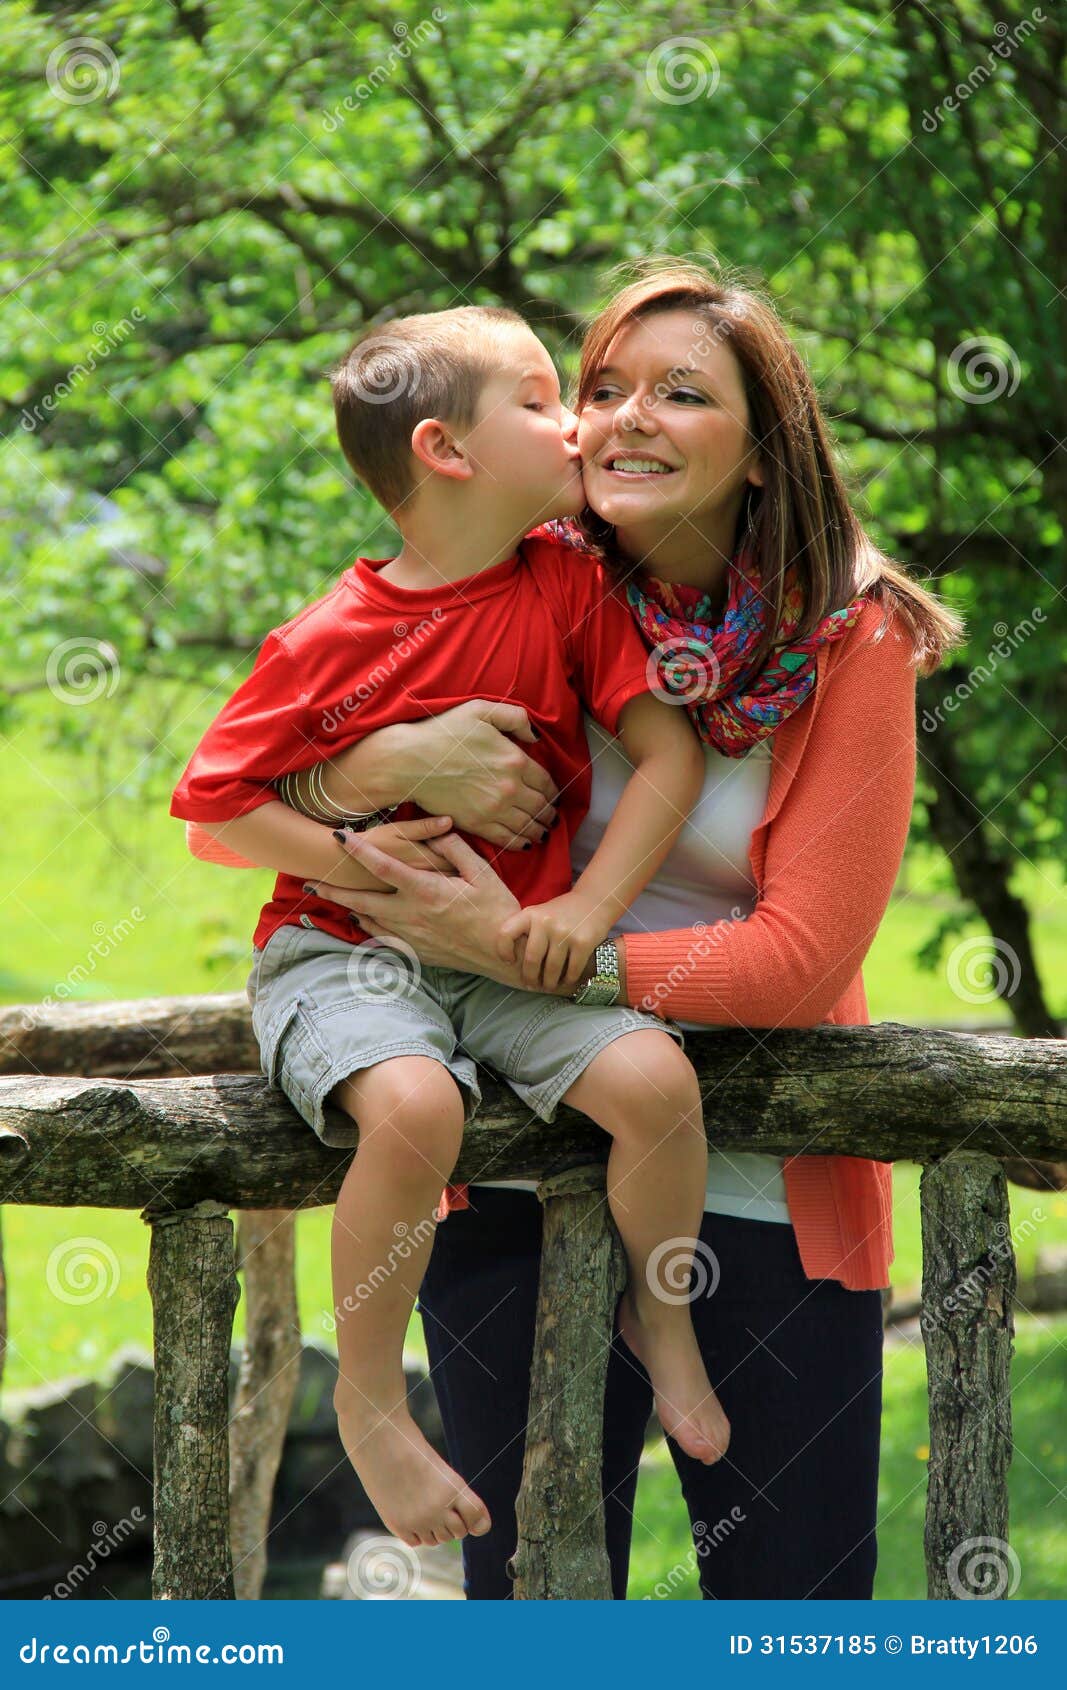 Mom And Boy Pics